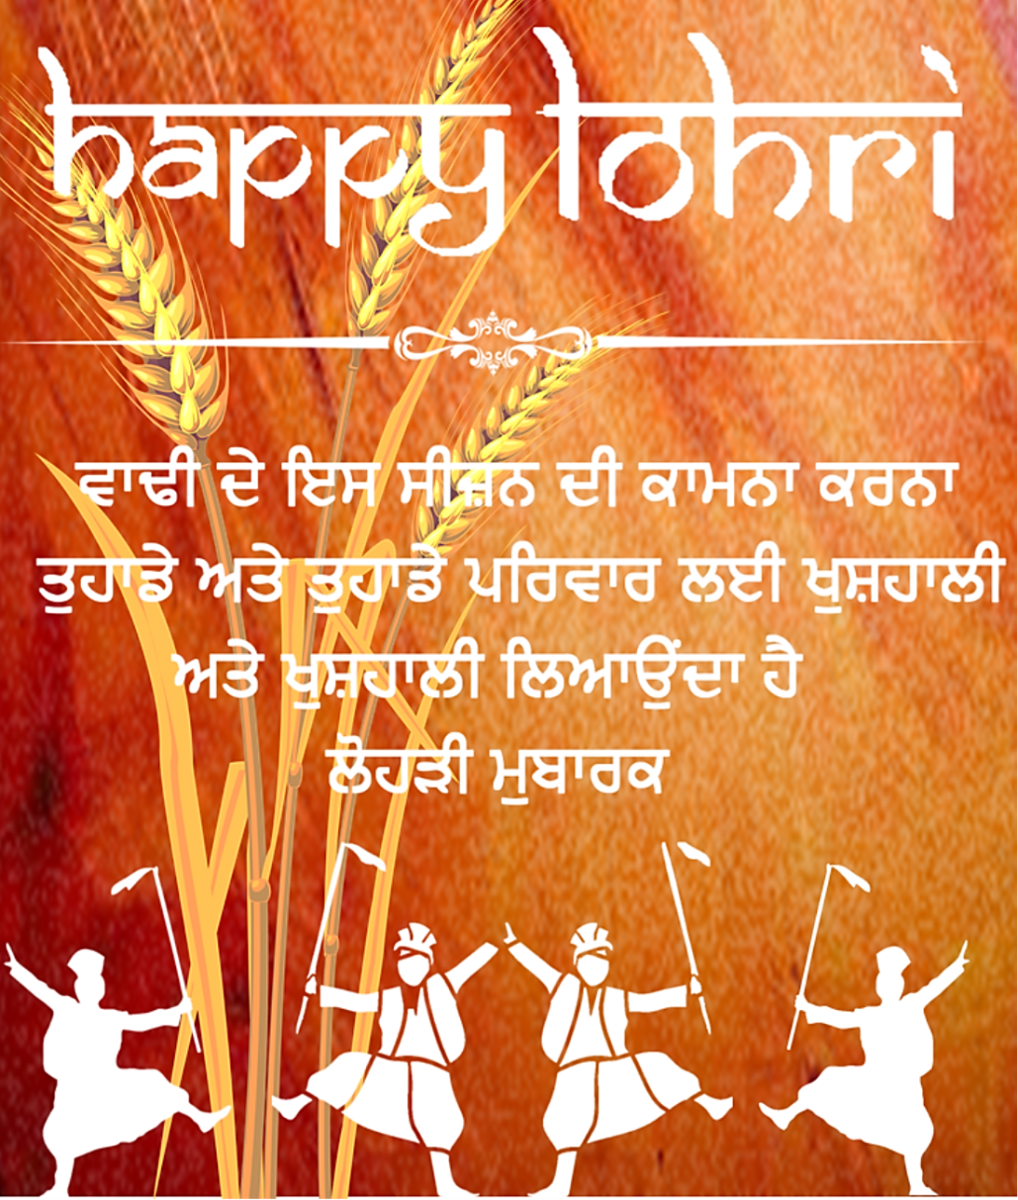 happy-lohri-wishes-and-greetings-in-punjabi-language